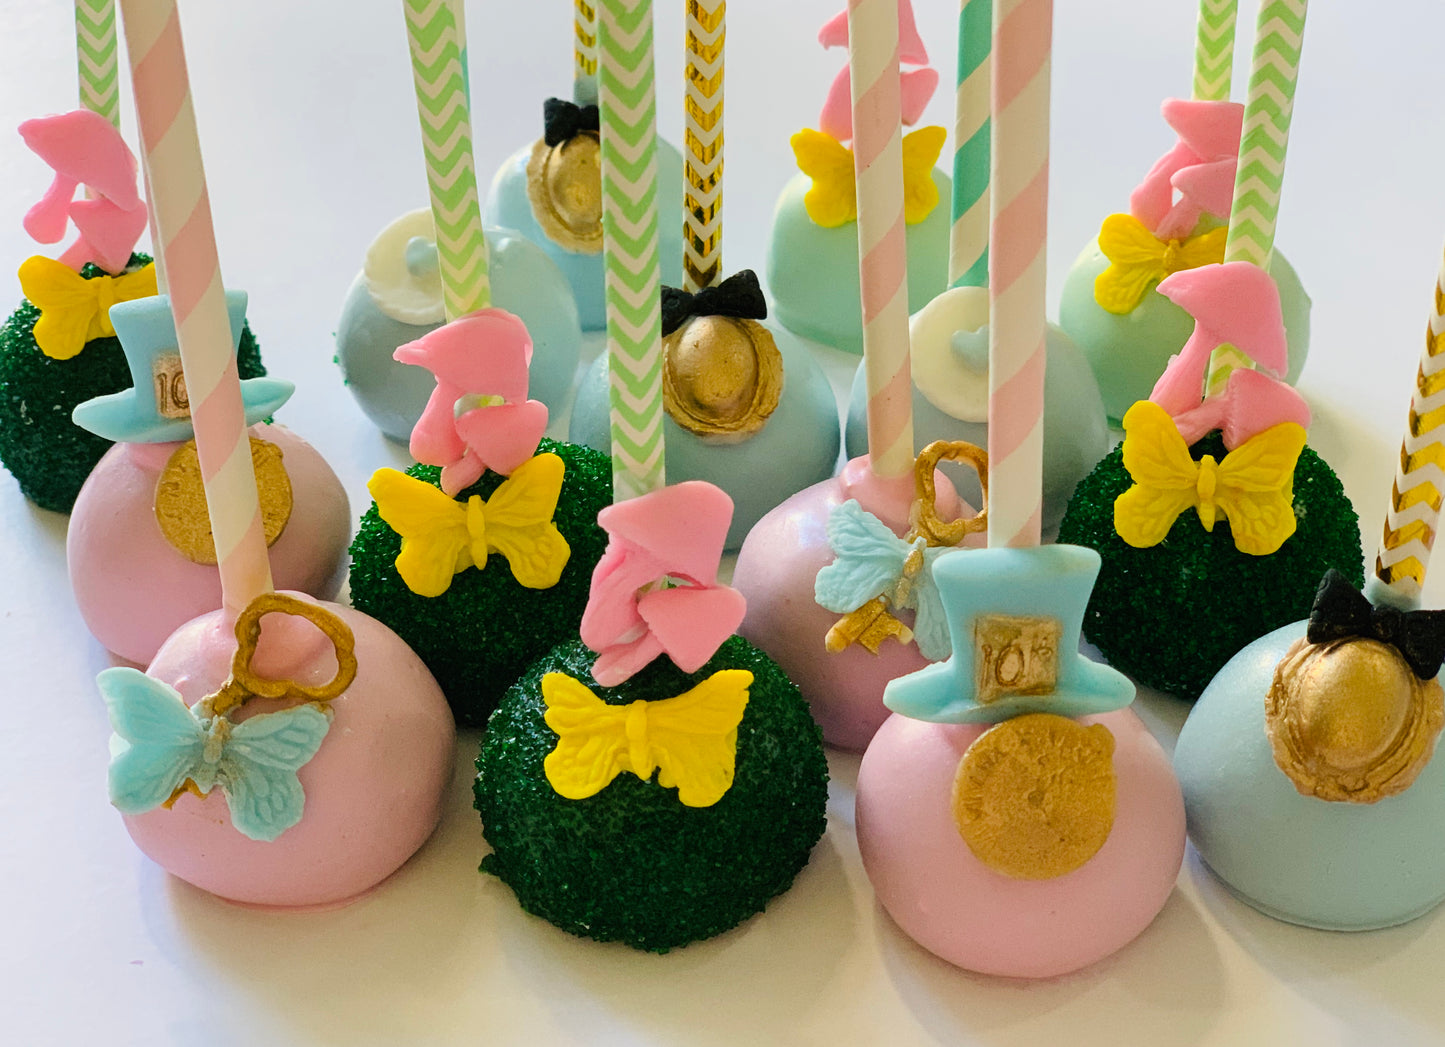 Alice in wonderland cake pops, baby shower cake pops, spring cake pops, cake pops near me 91411